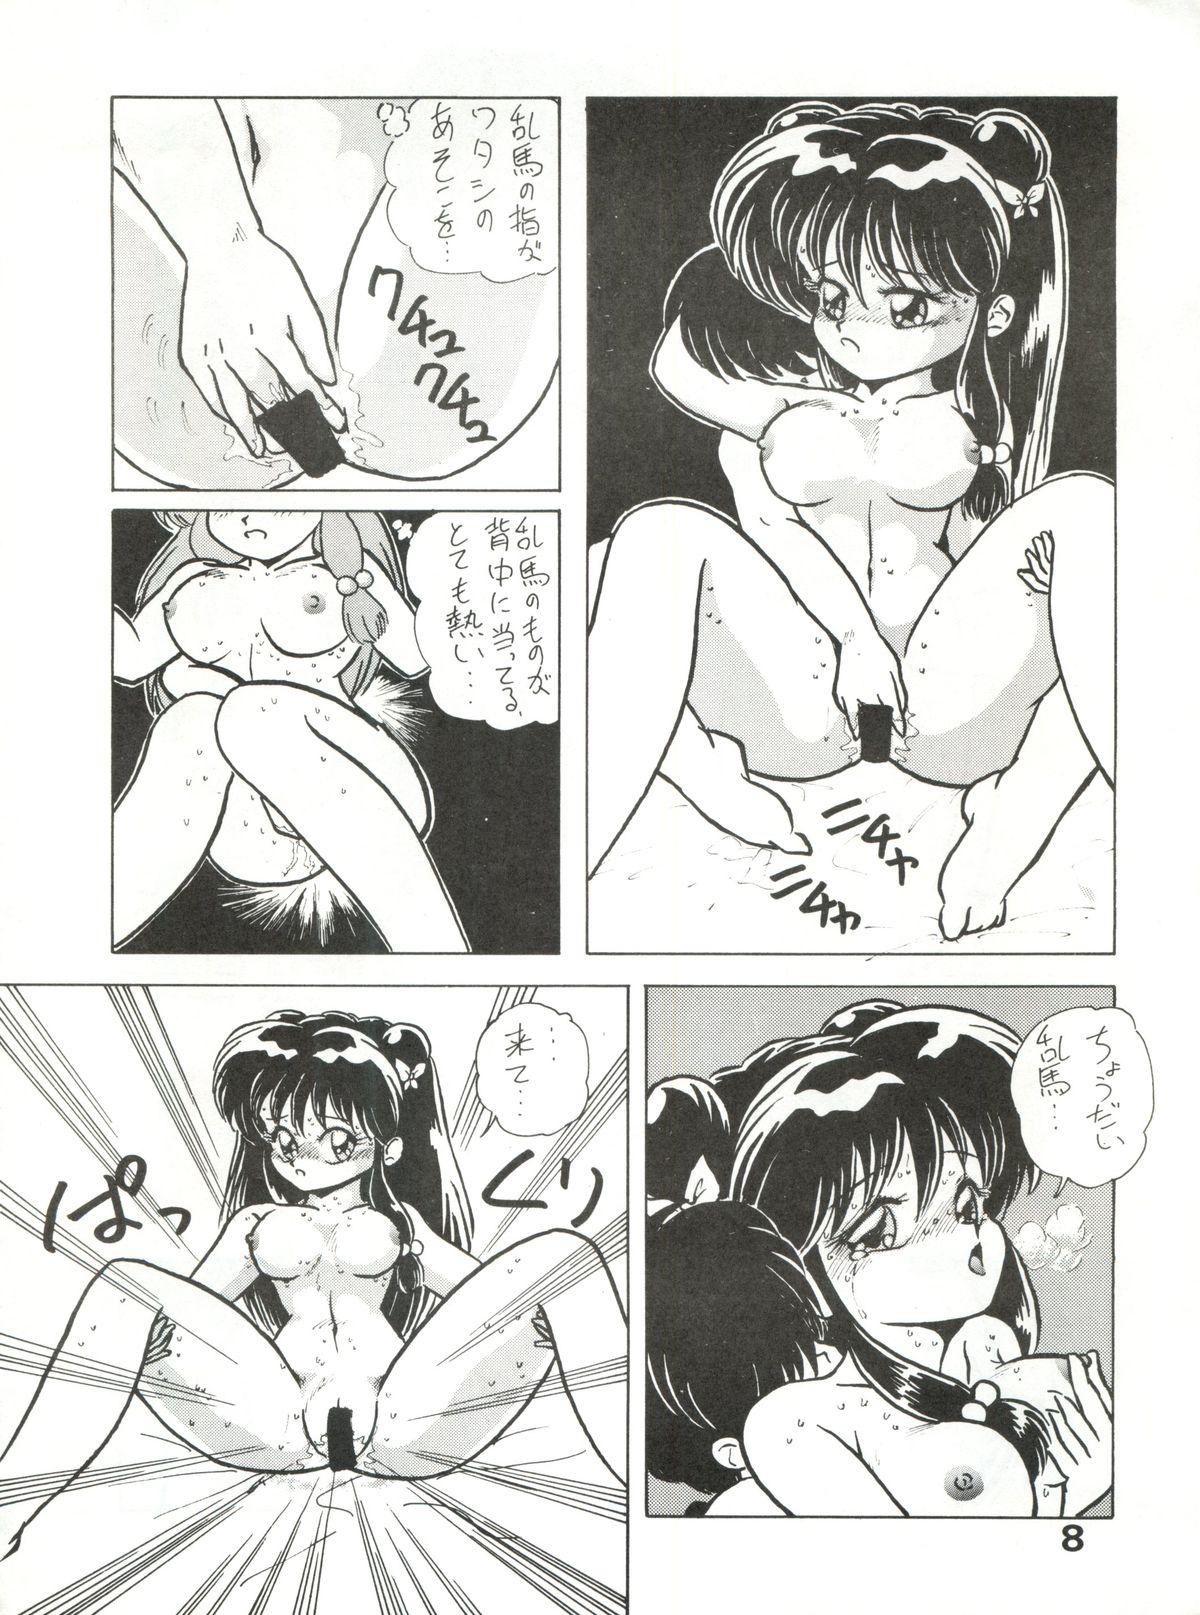 Massages Zubizu Bat - Sailor moon Ranma 12 3x3 eyes Clip - Page 8